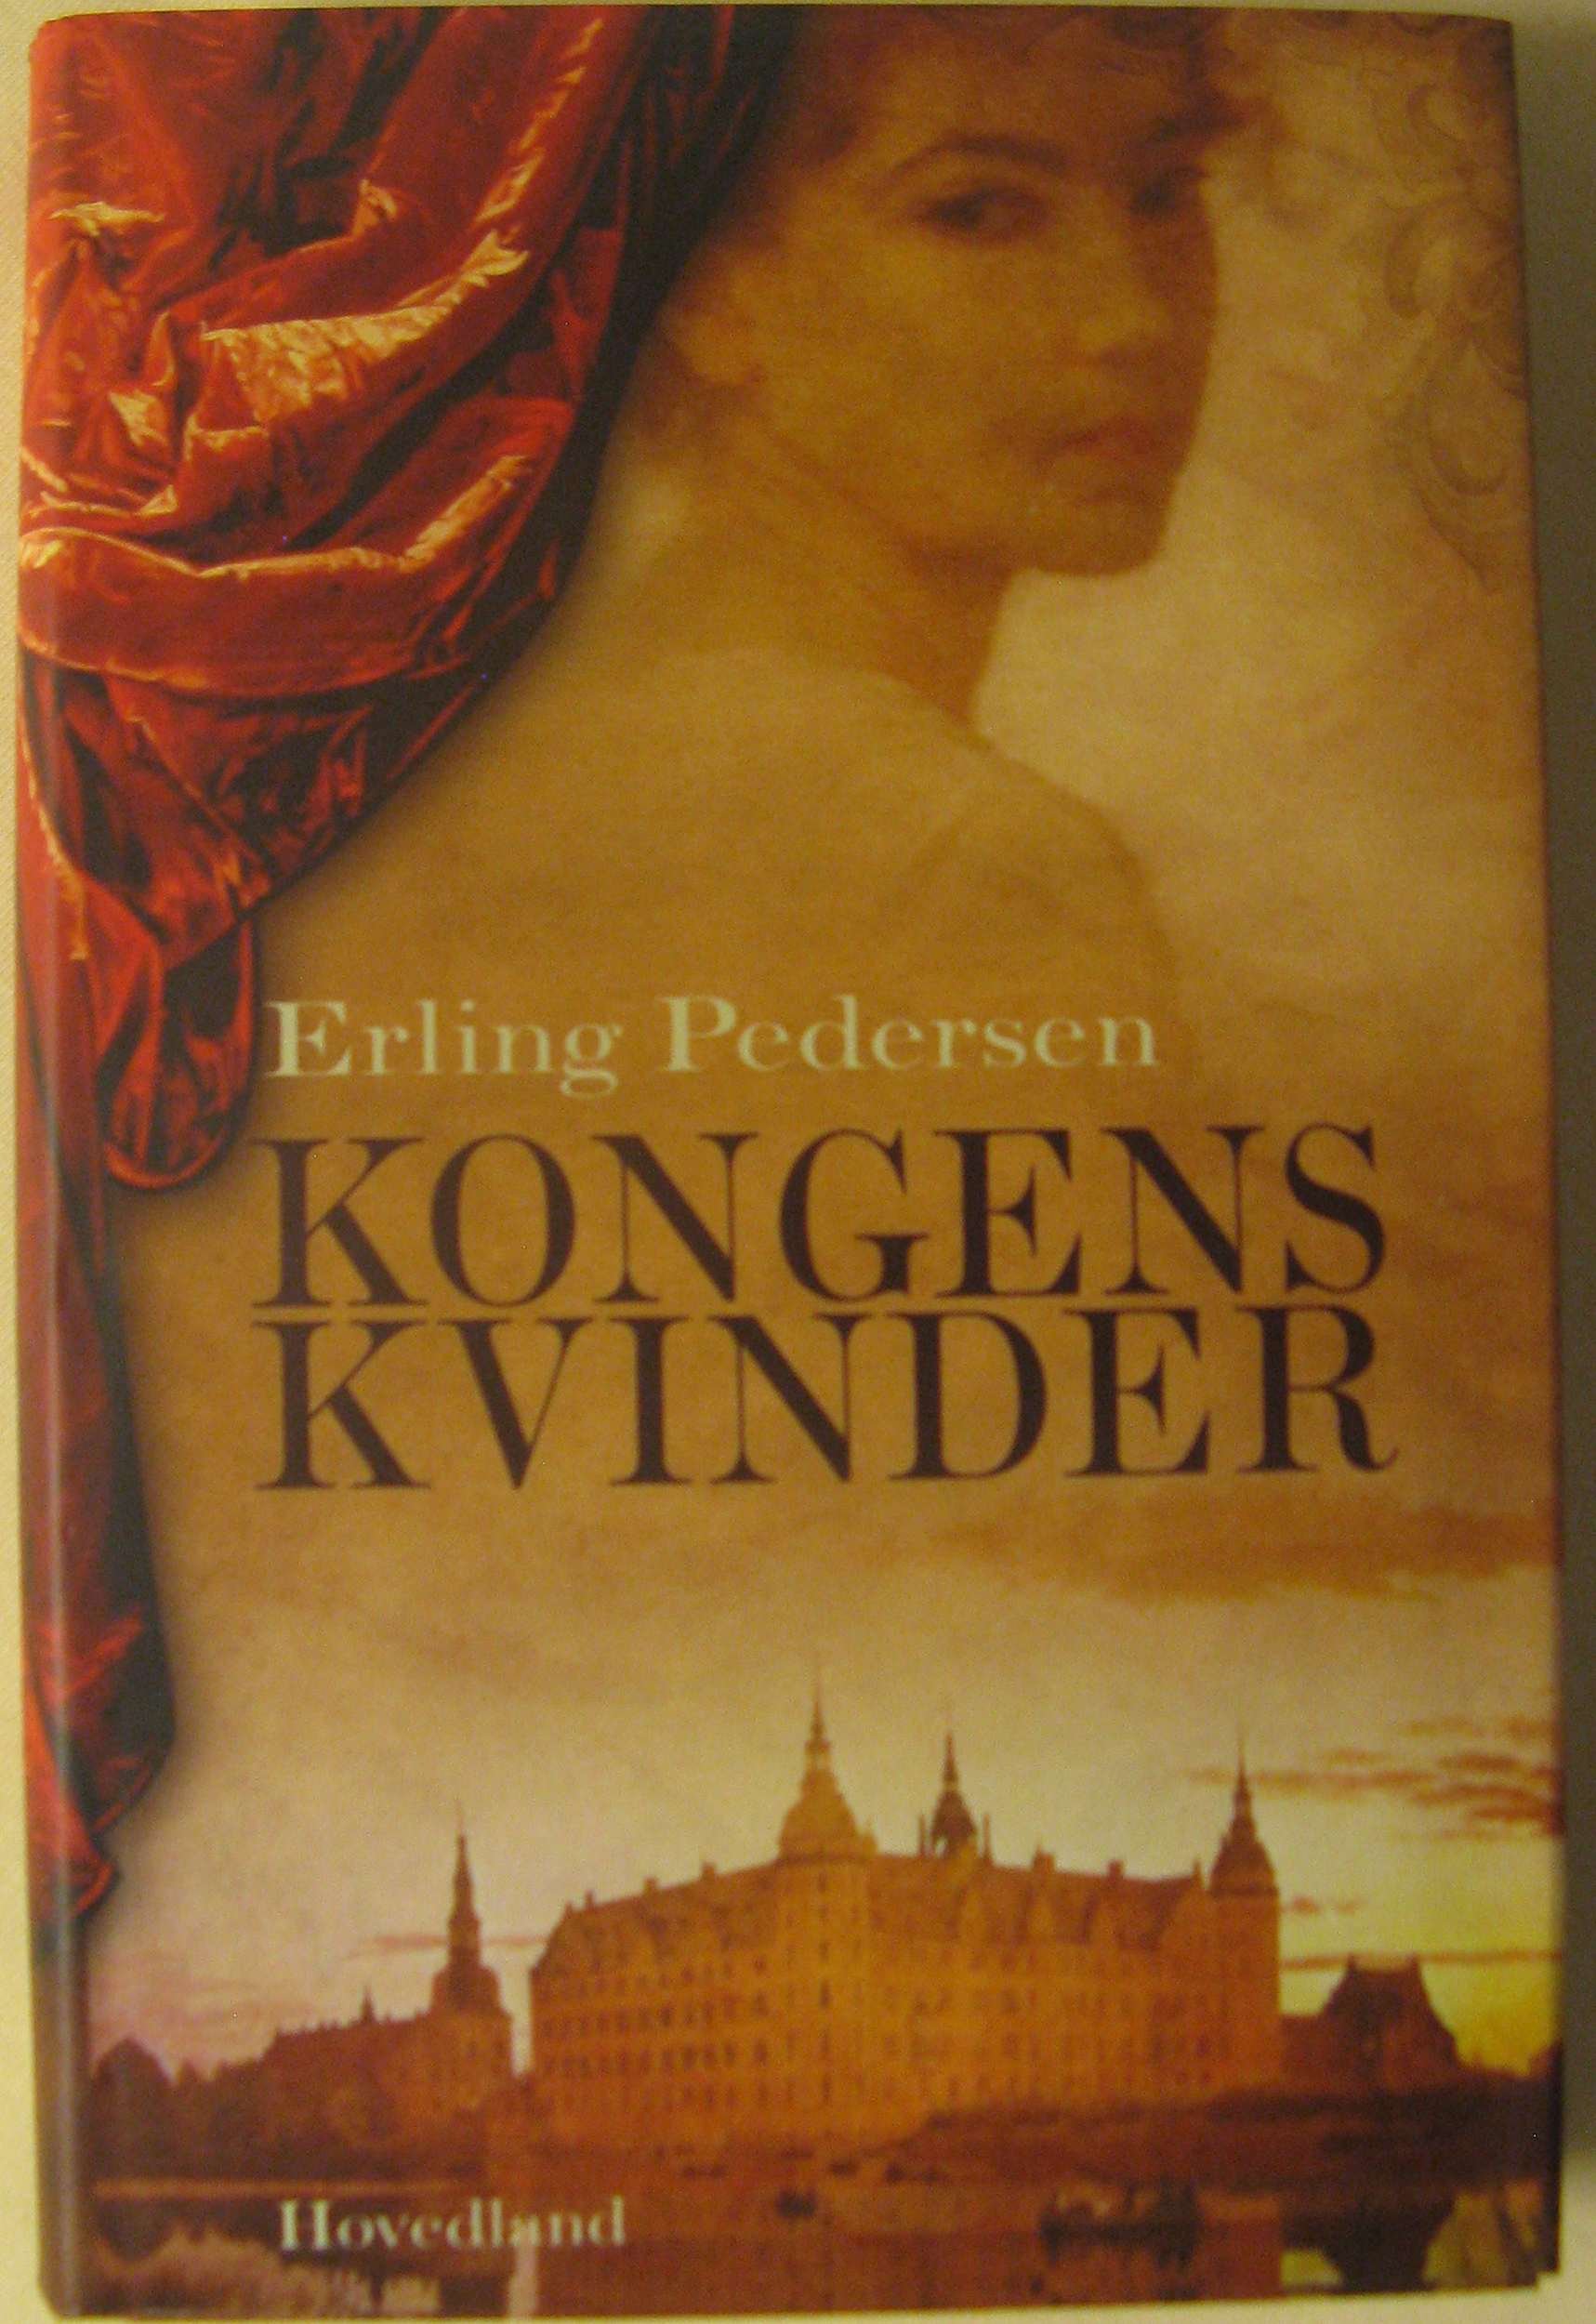 Kongens kvinder, Danmark 2009